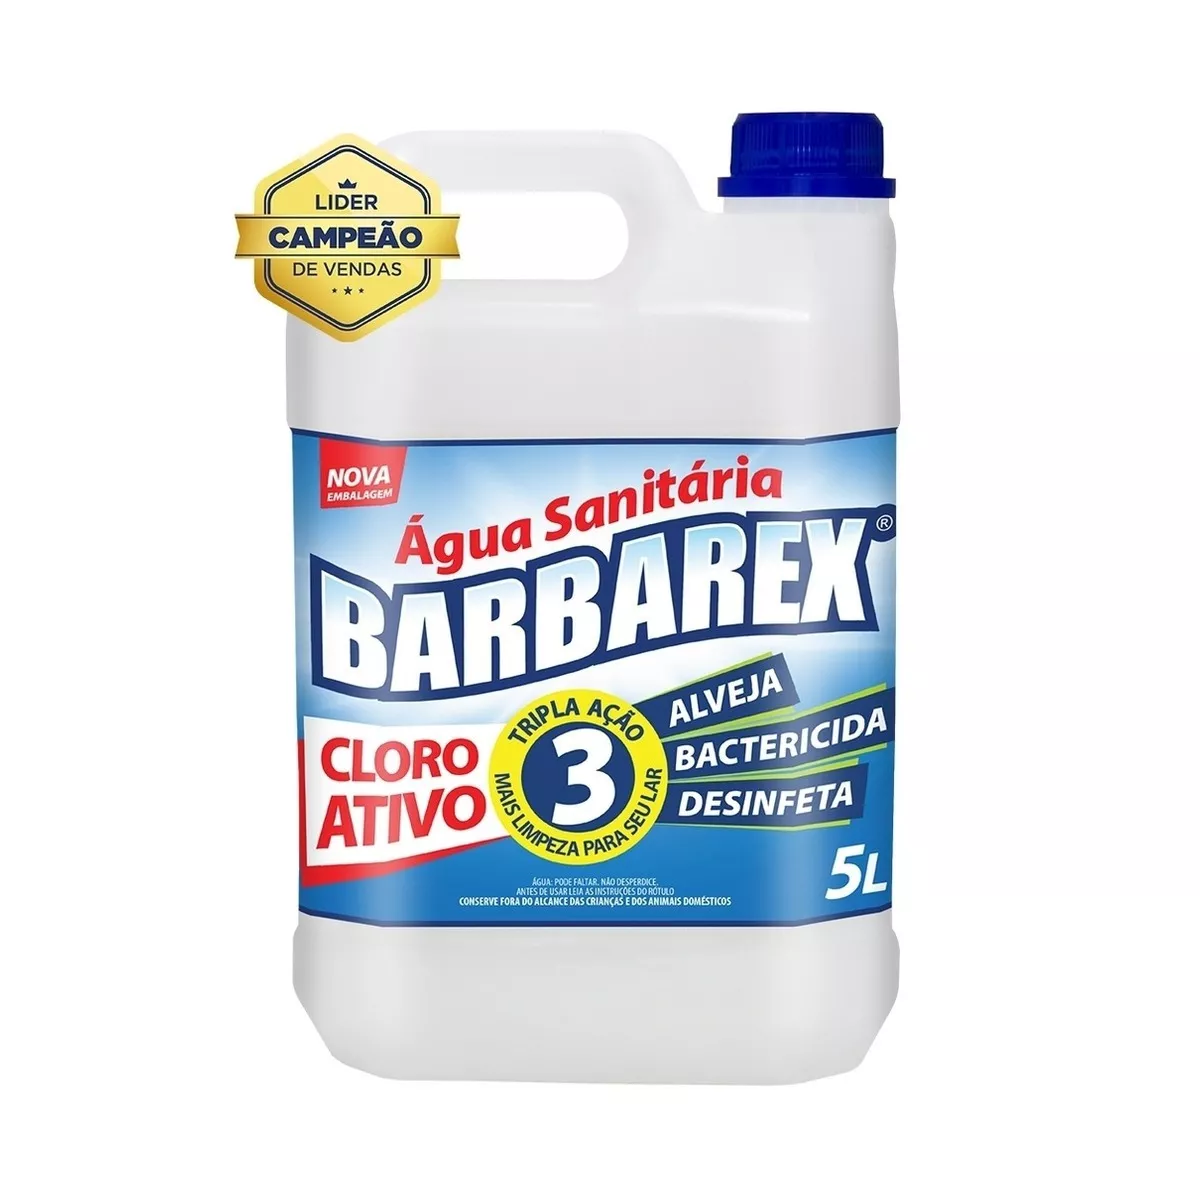 Água Sanitária Barbarex Galão 5l